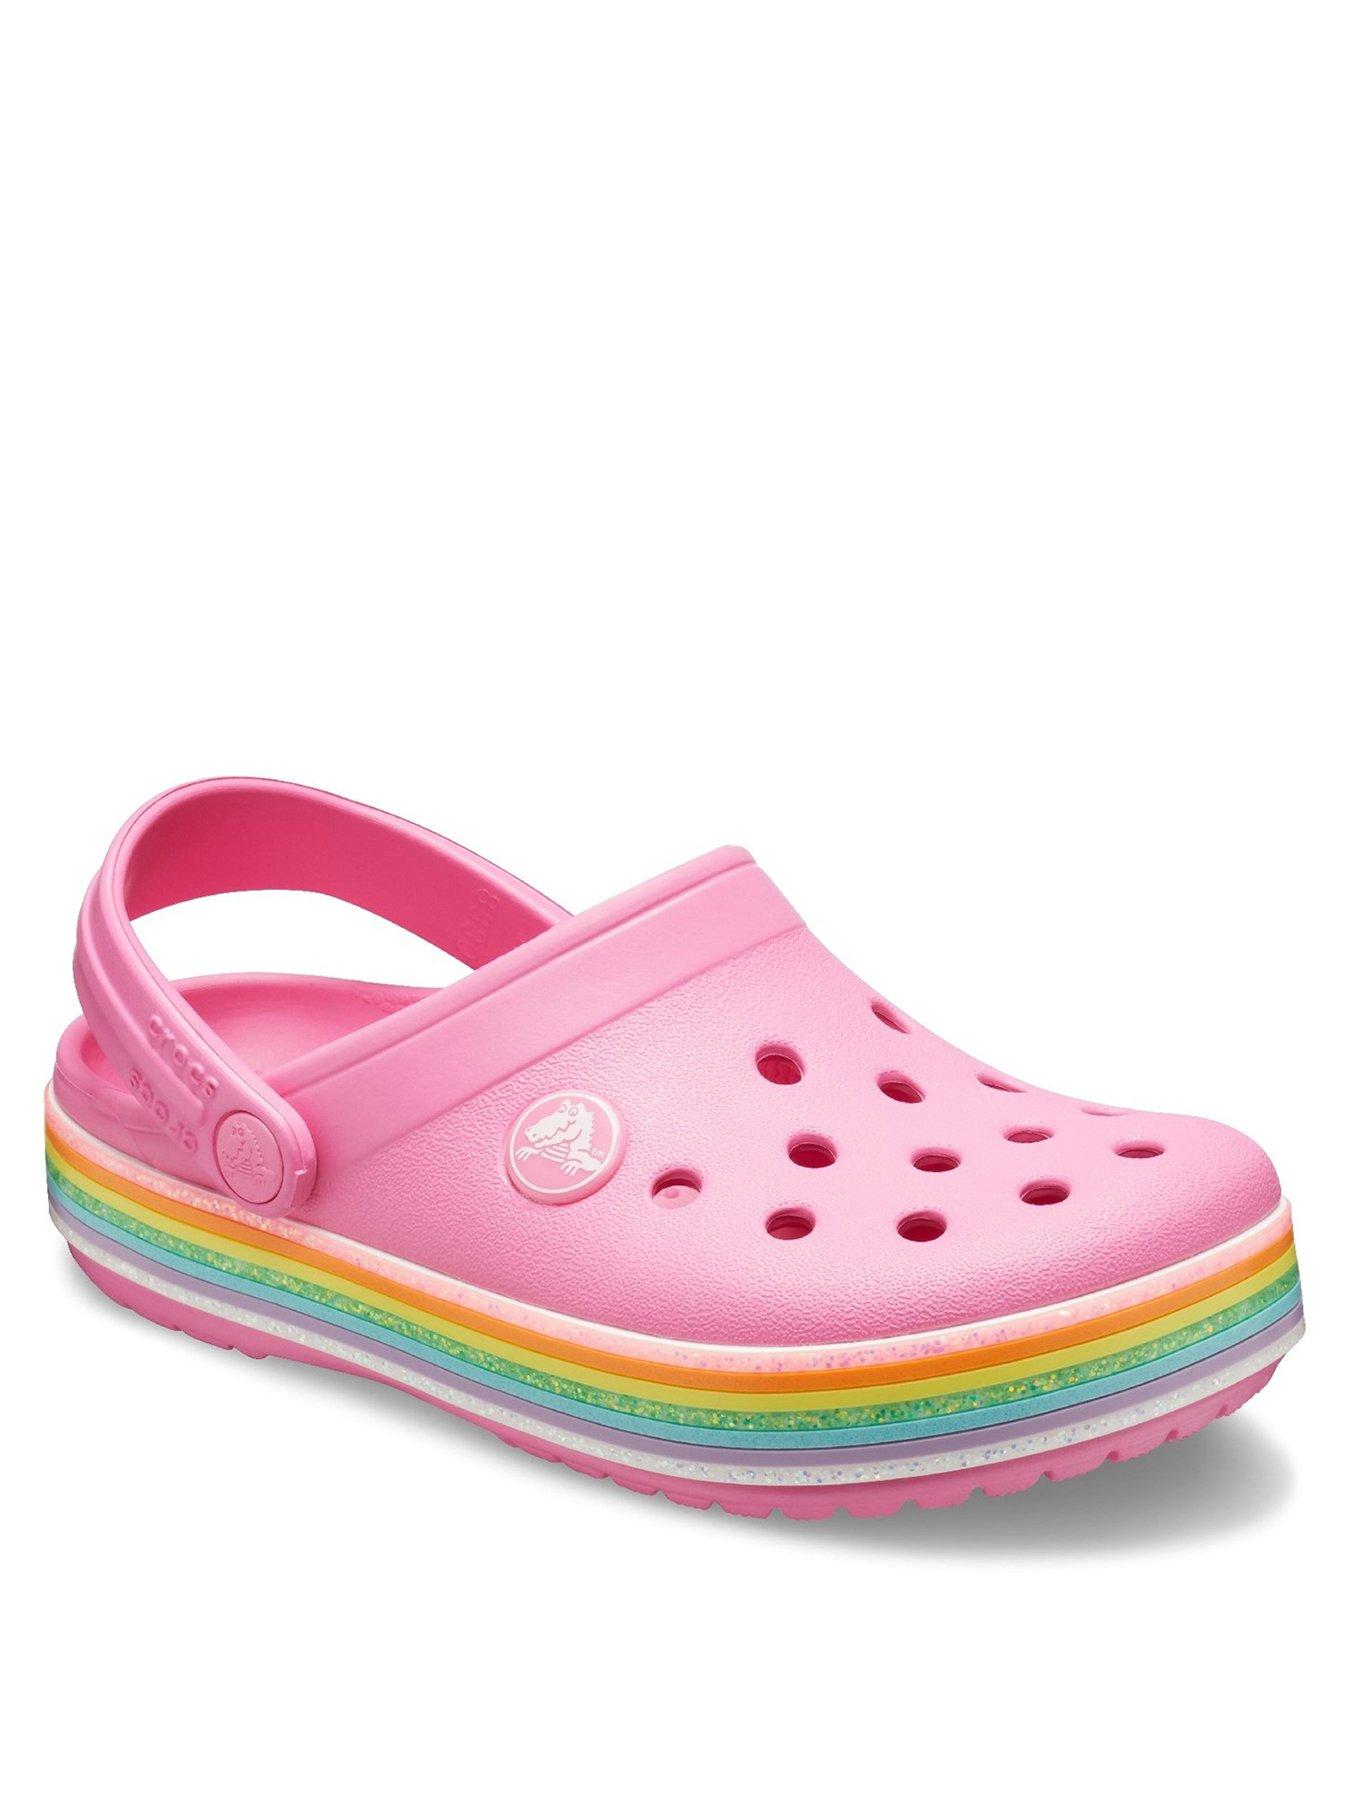 girls crocs size 1